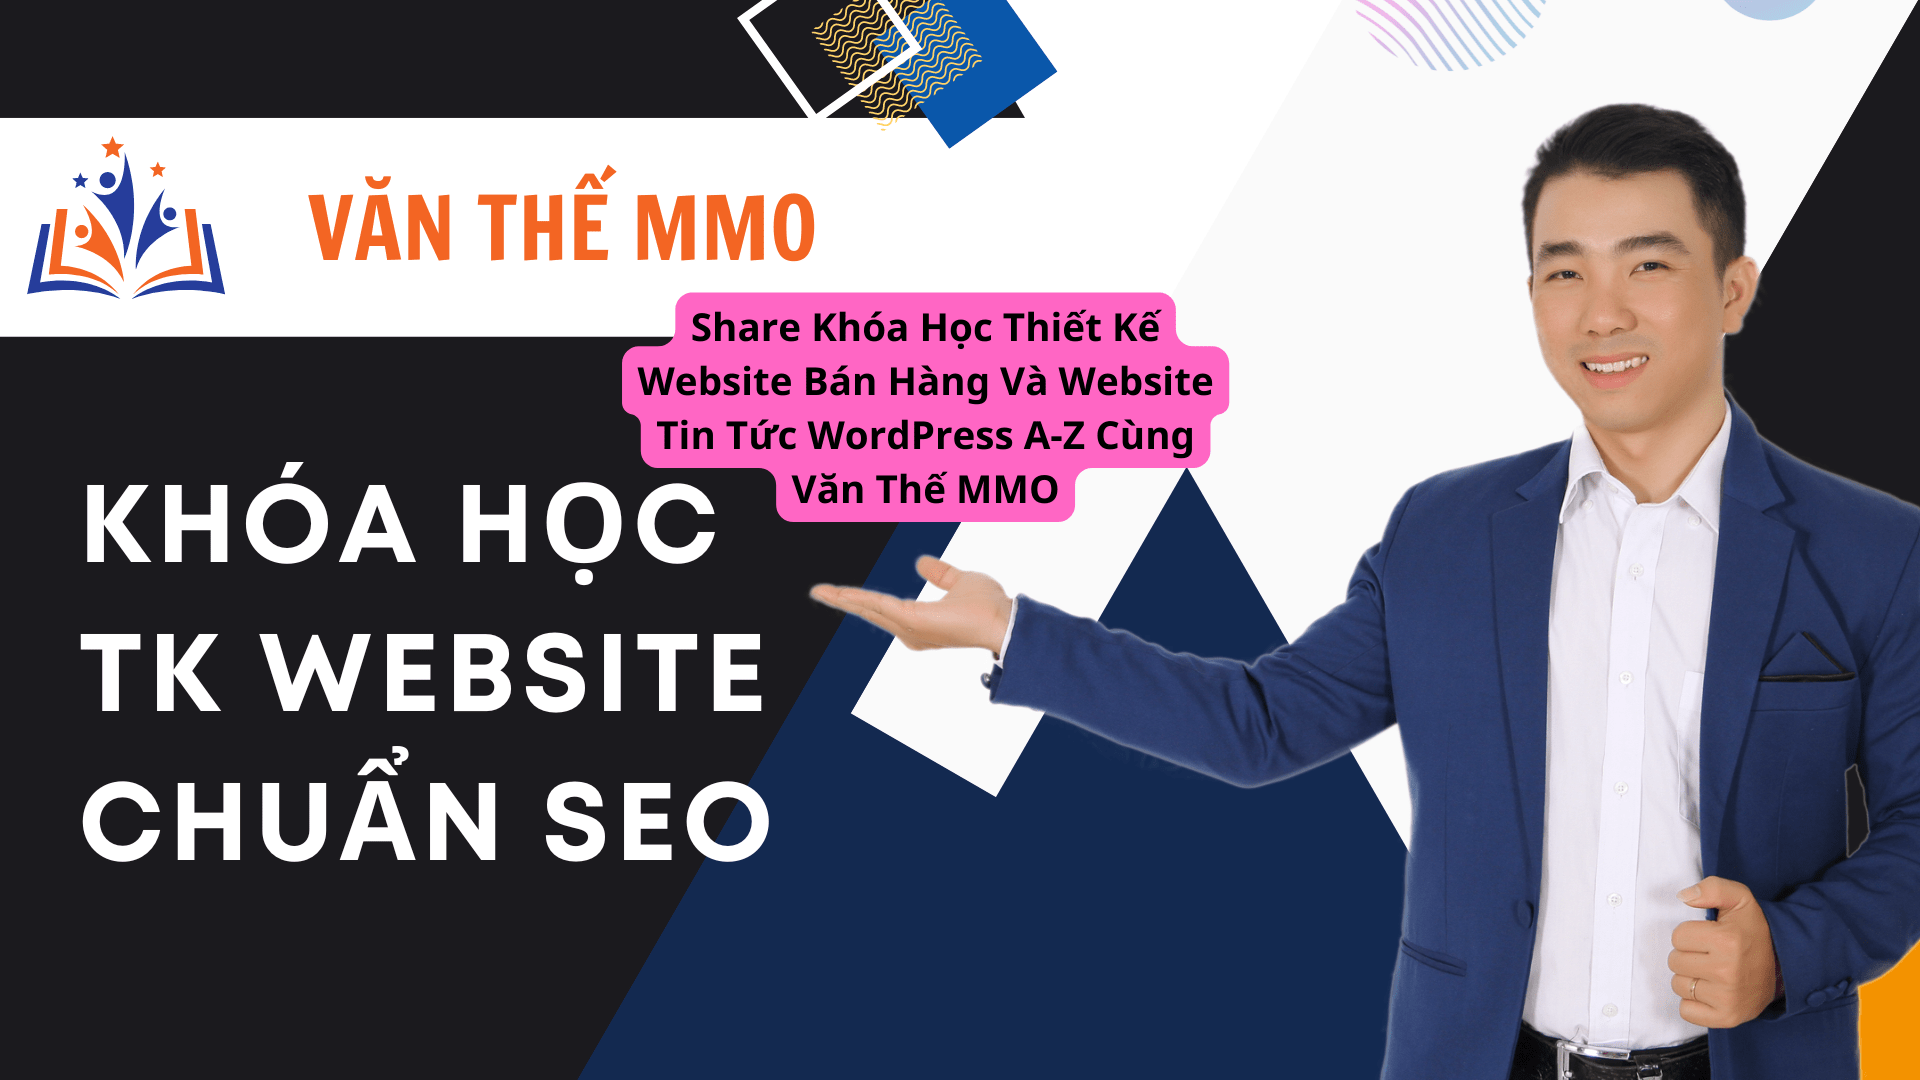 share khoa hoc thiet ke web ban hang va web tin tuc bang wordpress cung van the mmo